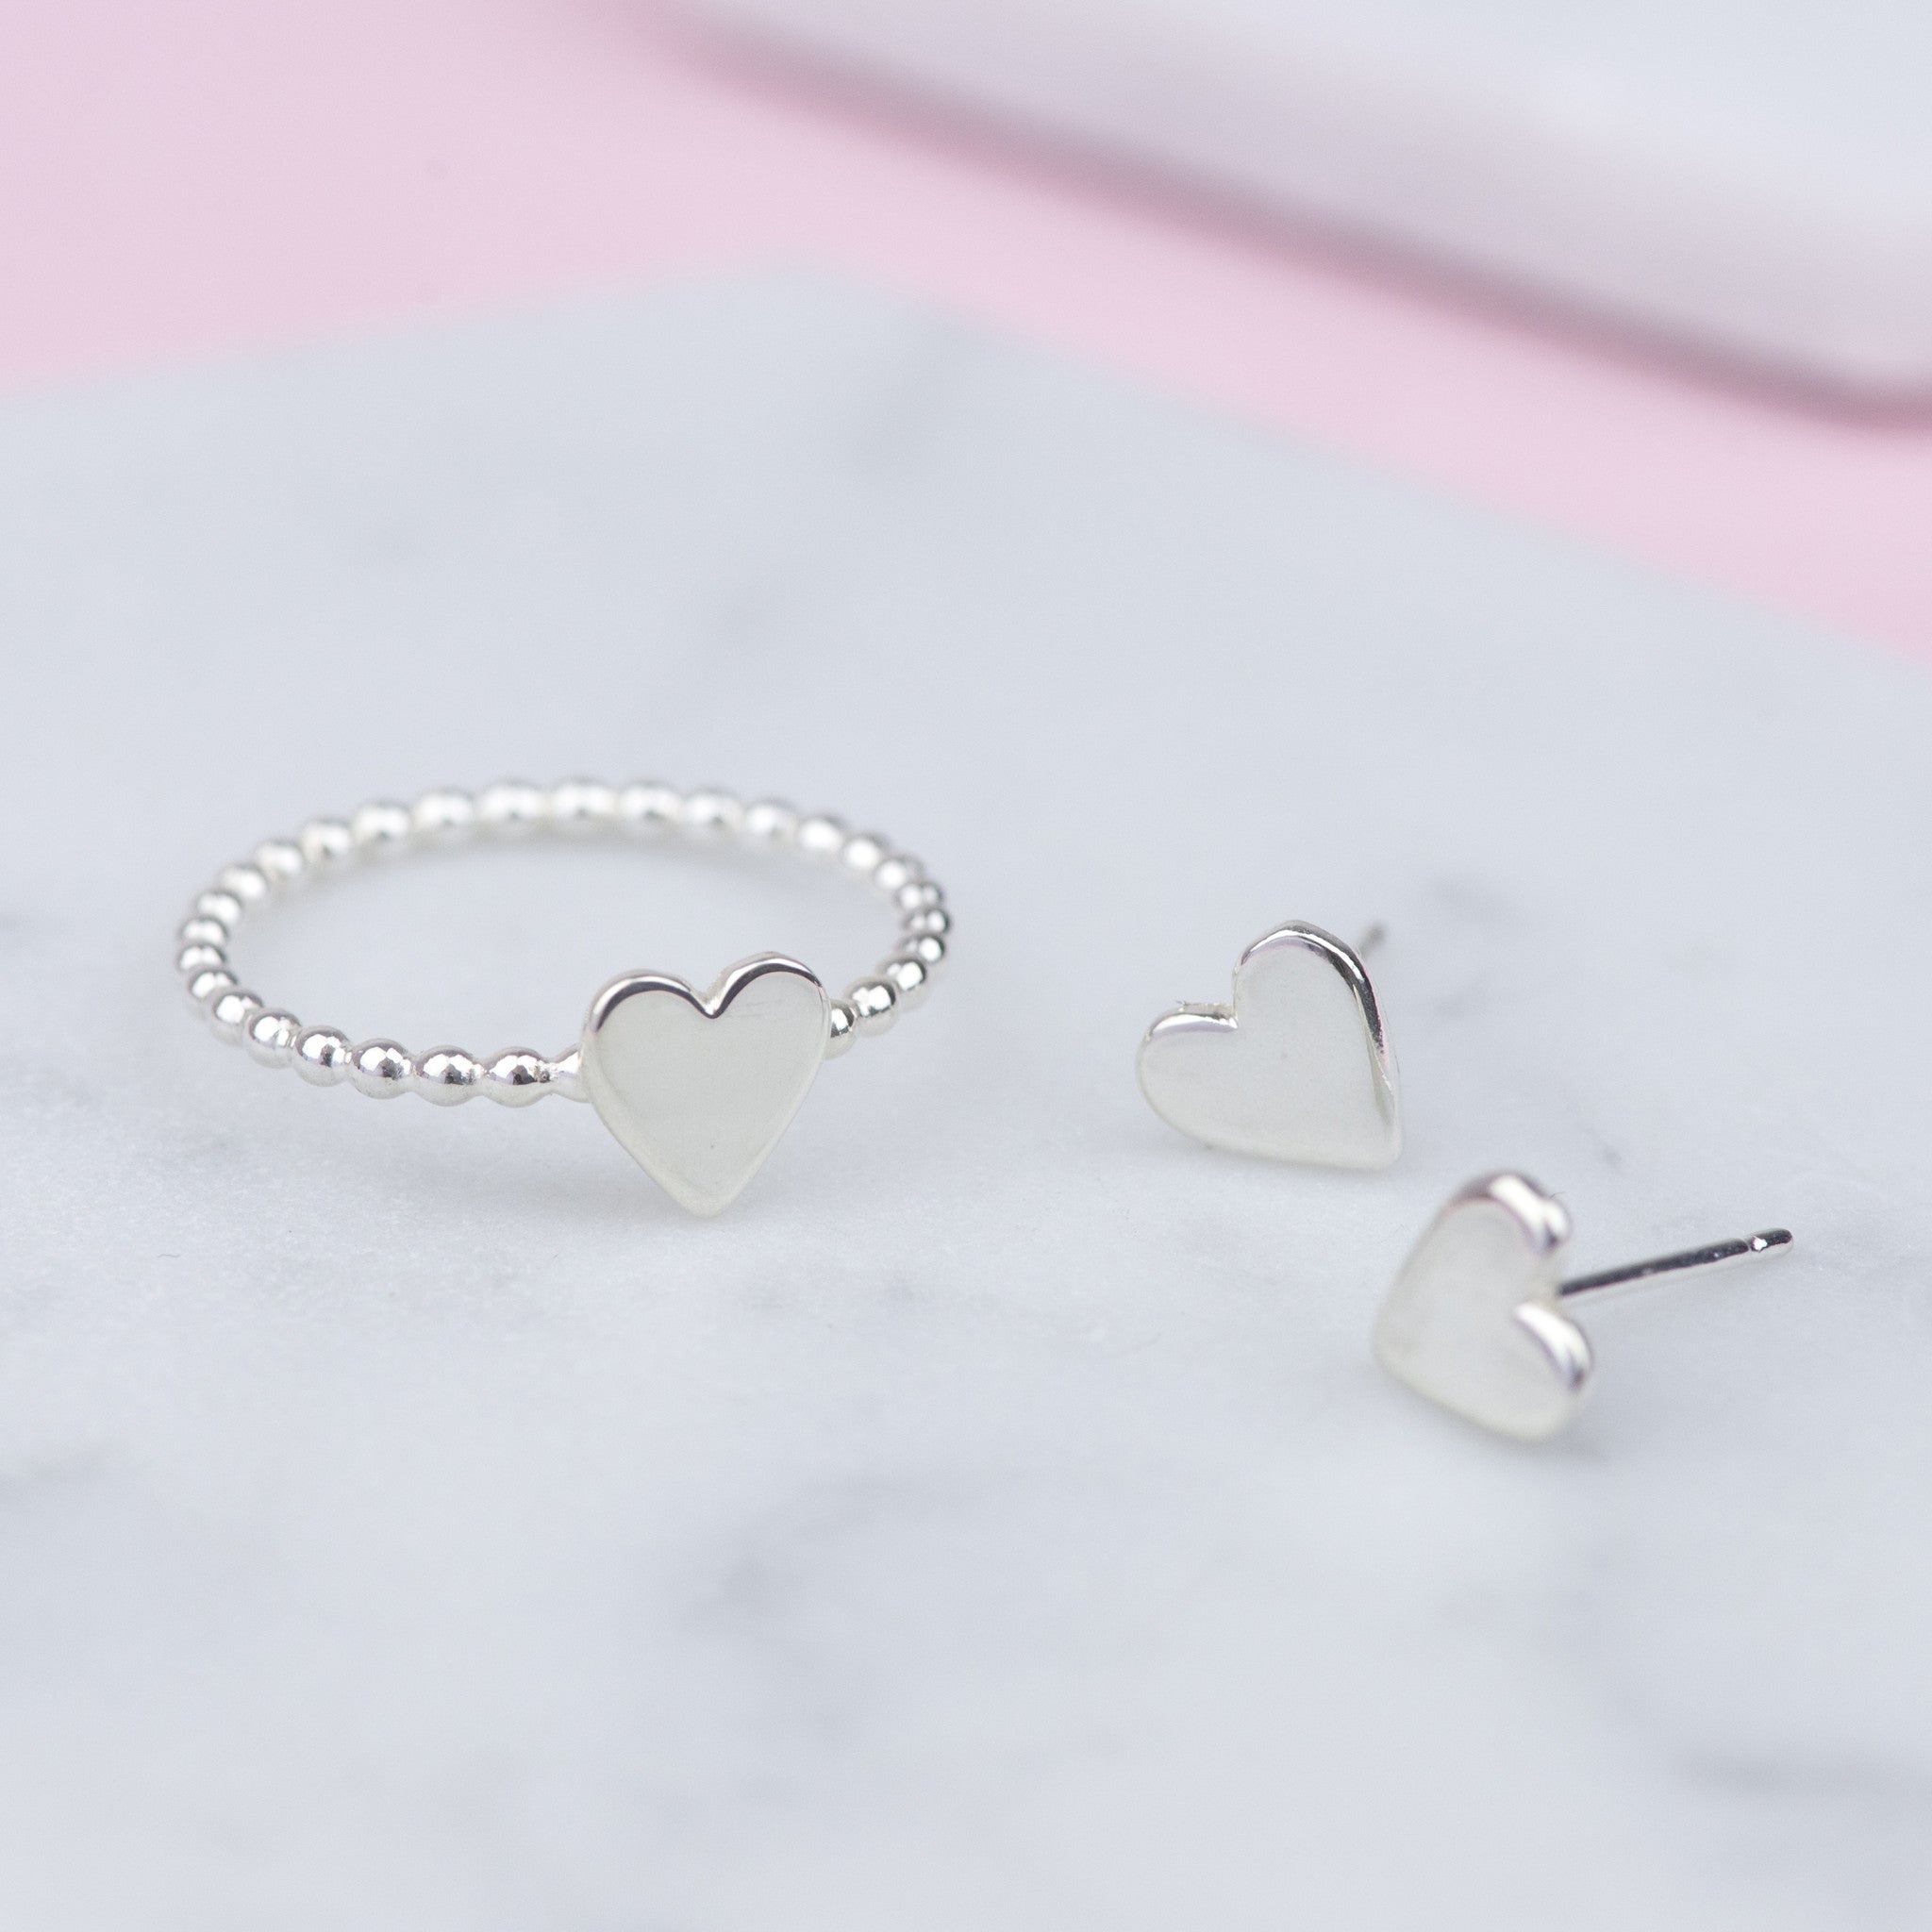 Handmade Sterling Silver Heart Ring and Earrings